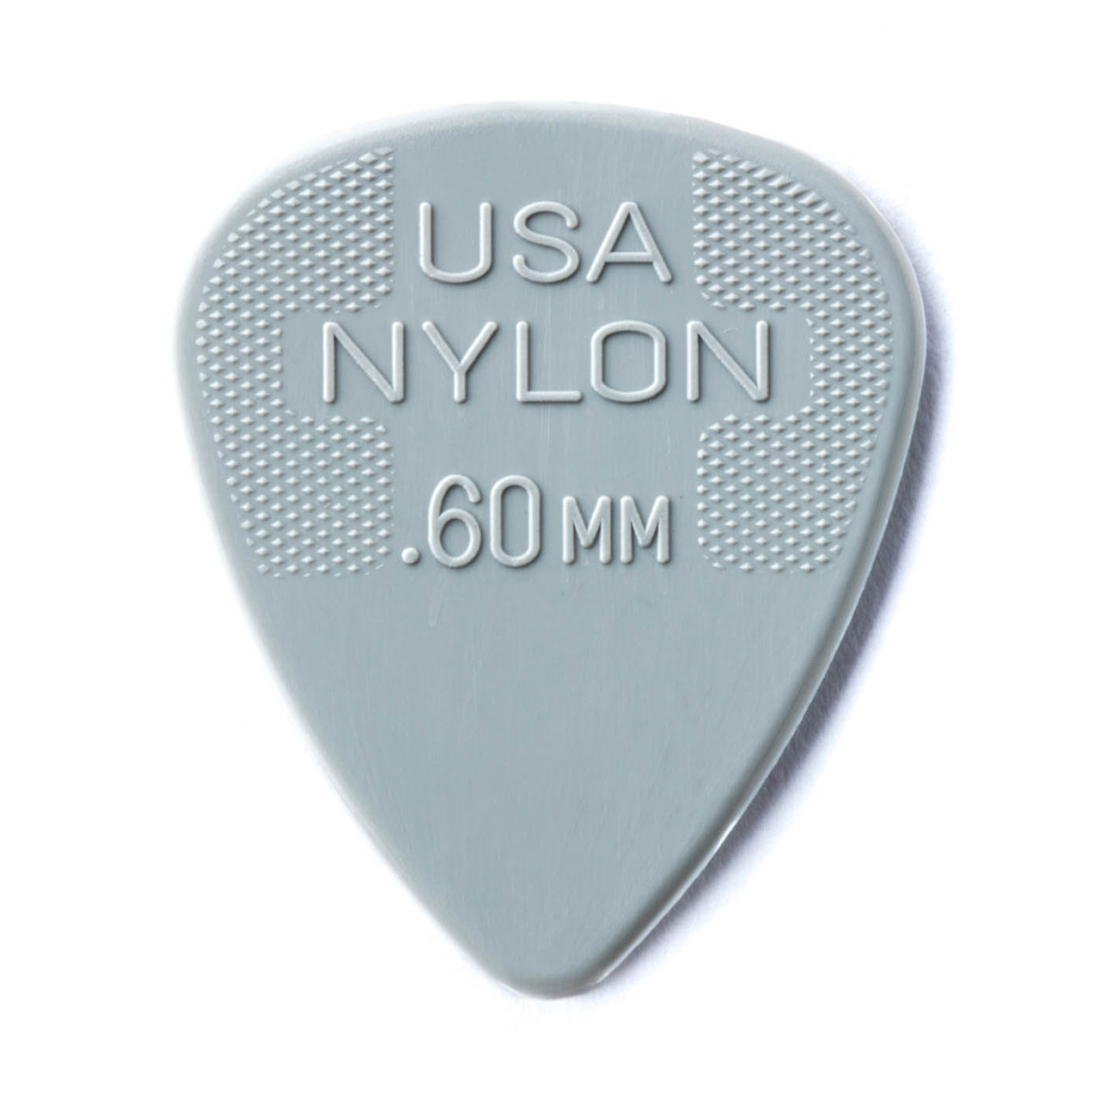 Nylon Standard Player Pack (72 Pack) - .60mm